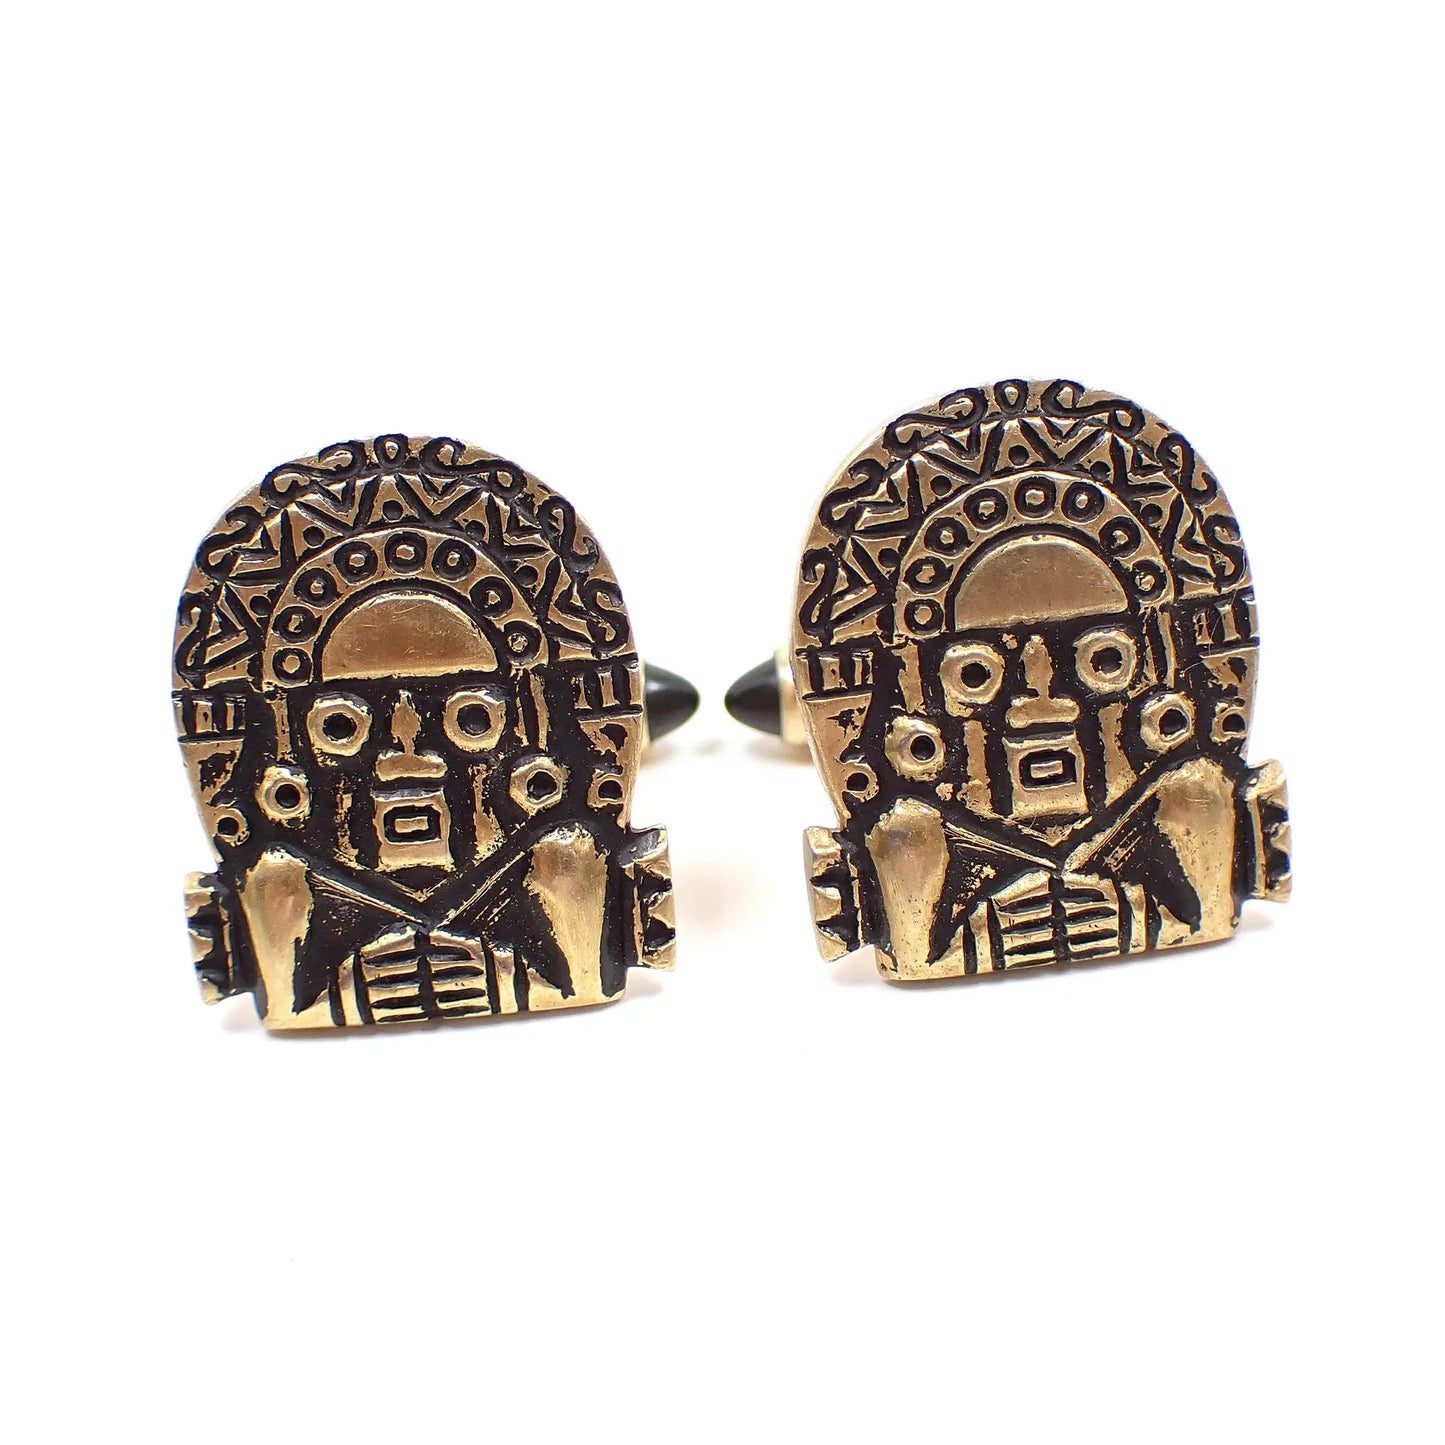 Krementz Aztec Mayan Sun God Vintage Cufflinks, Antiqued Gold Tone Bullet Back Cuff Links with Black Lucite Ends